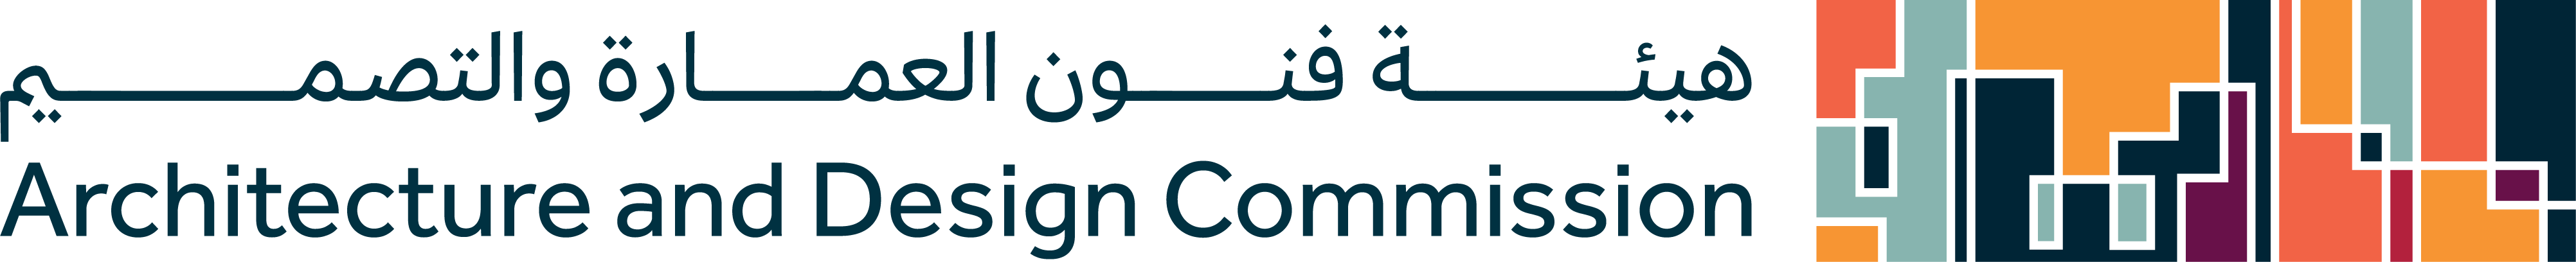 Architecture and Design Commission Logo